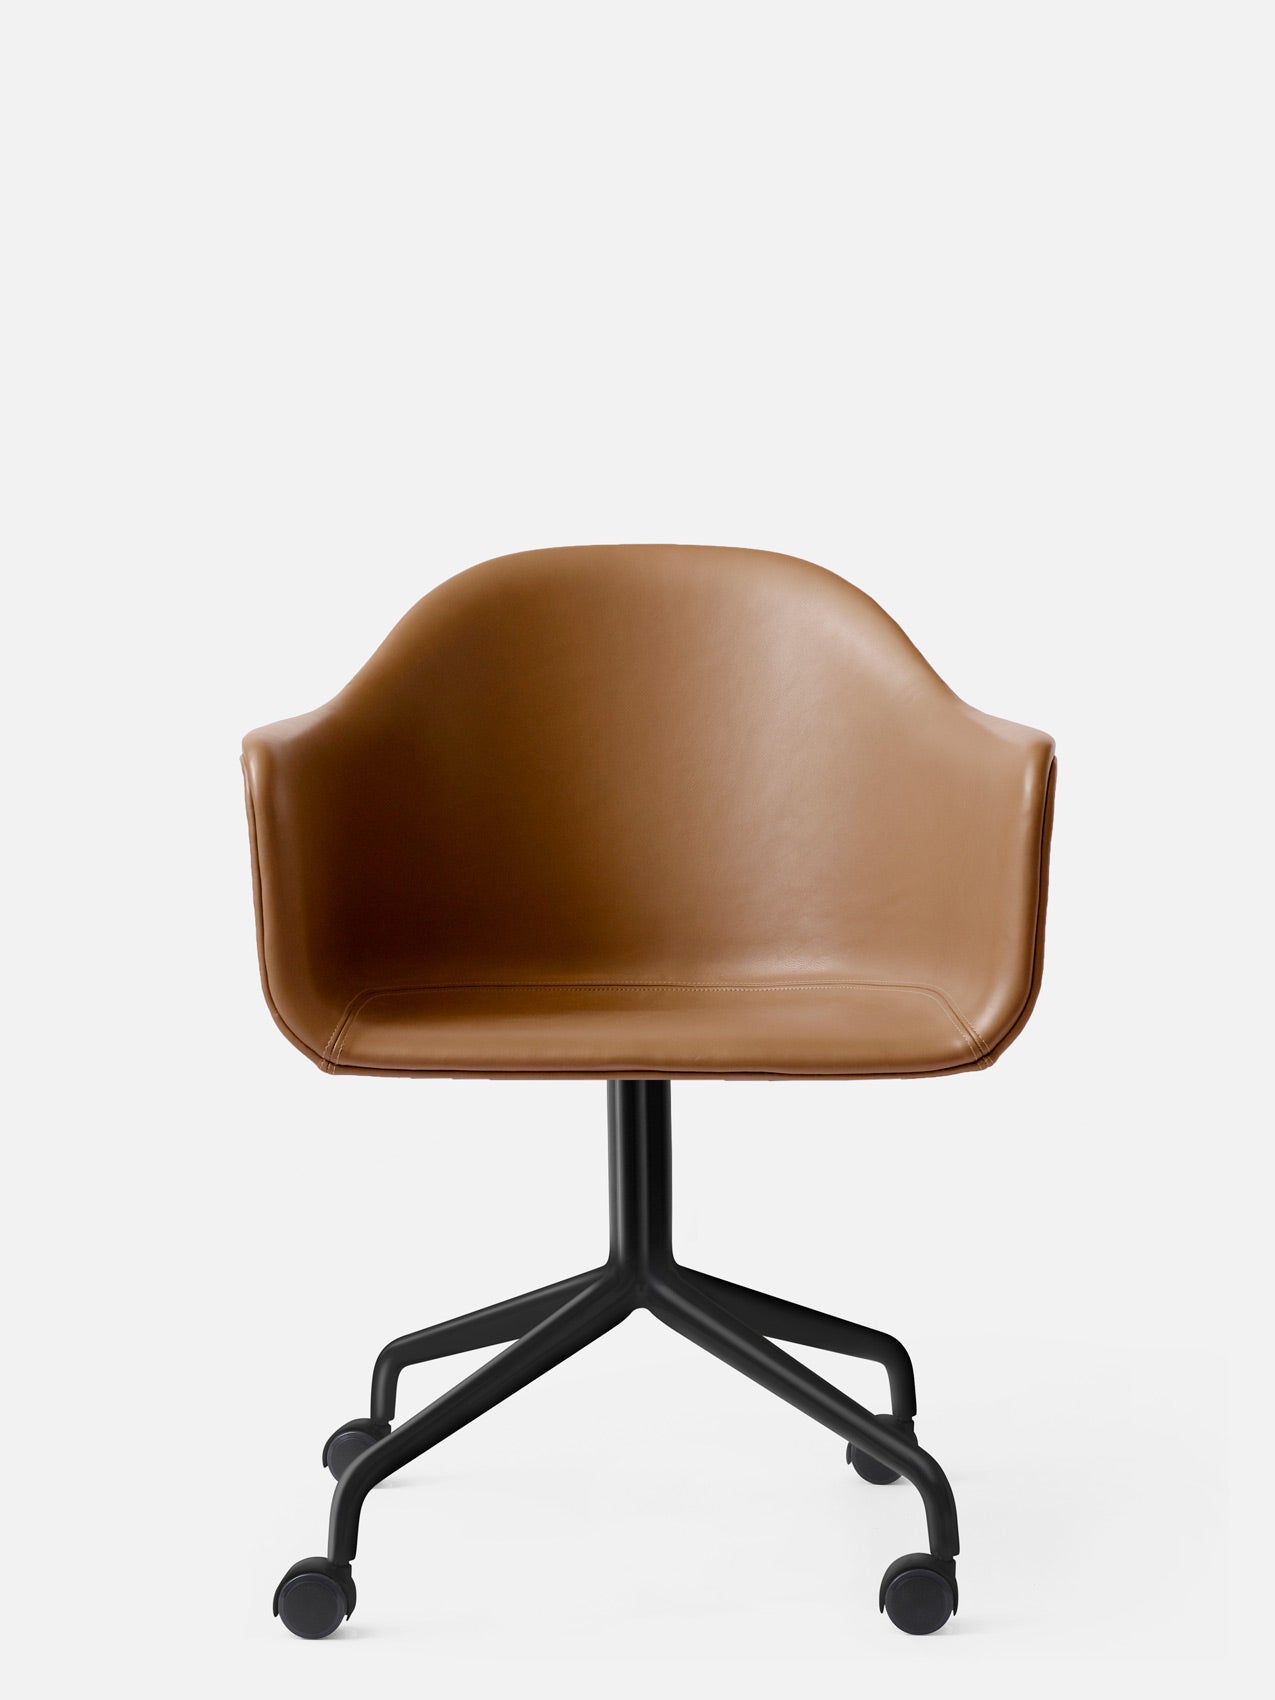 Harbour Arm Chair, Upholstered-Chair-Norm Architects-Star Base (Seat 17.7in H)/Black Steel w. Casters-0250 Cognac/Dakar-menu-minimalist-modern-danish-design-home-decor